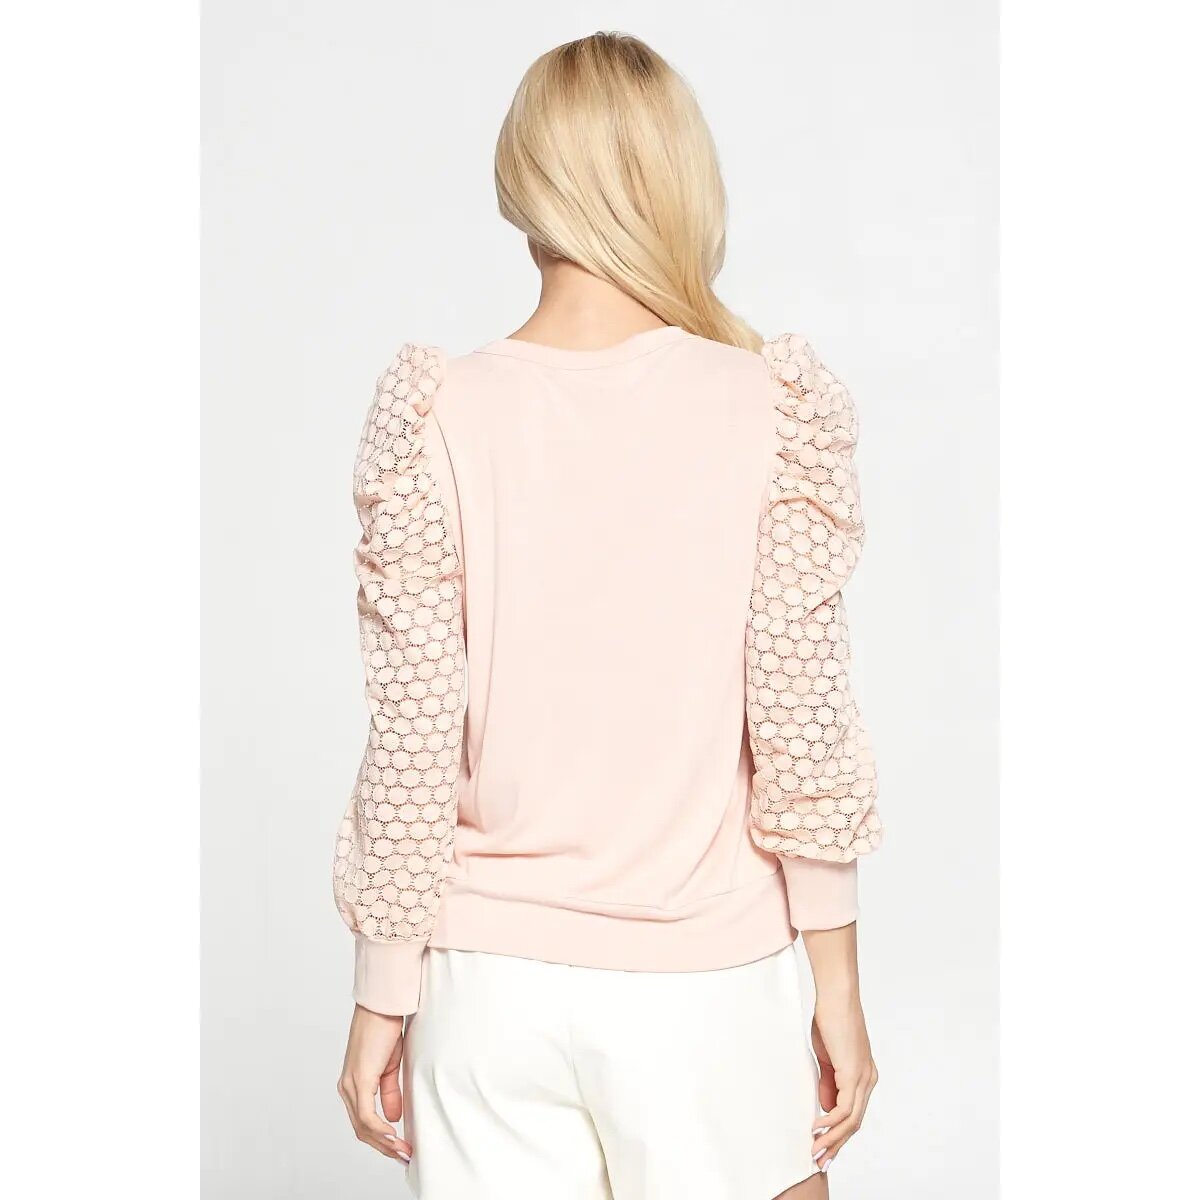 Renee C Pink Sheer Puff Sleeve Top Made in USA